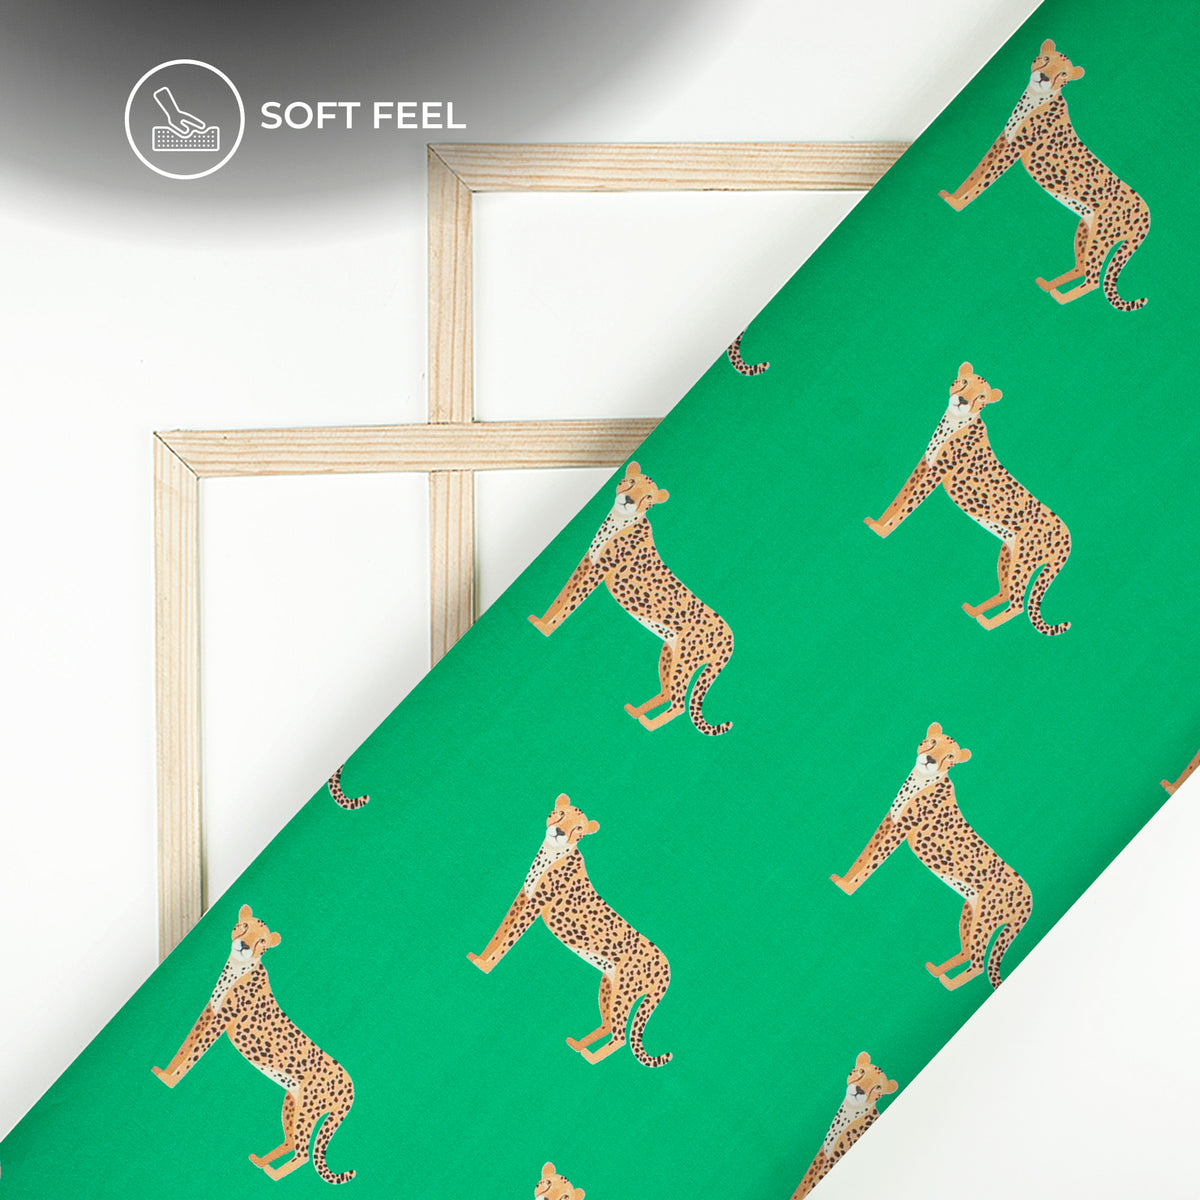 Forest Green leopard Digital Print Japan Satin Fabric